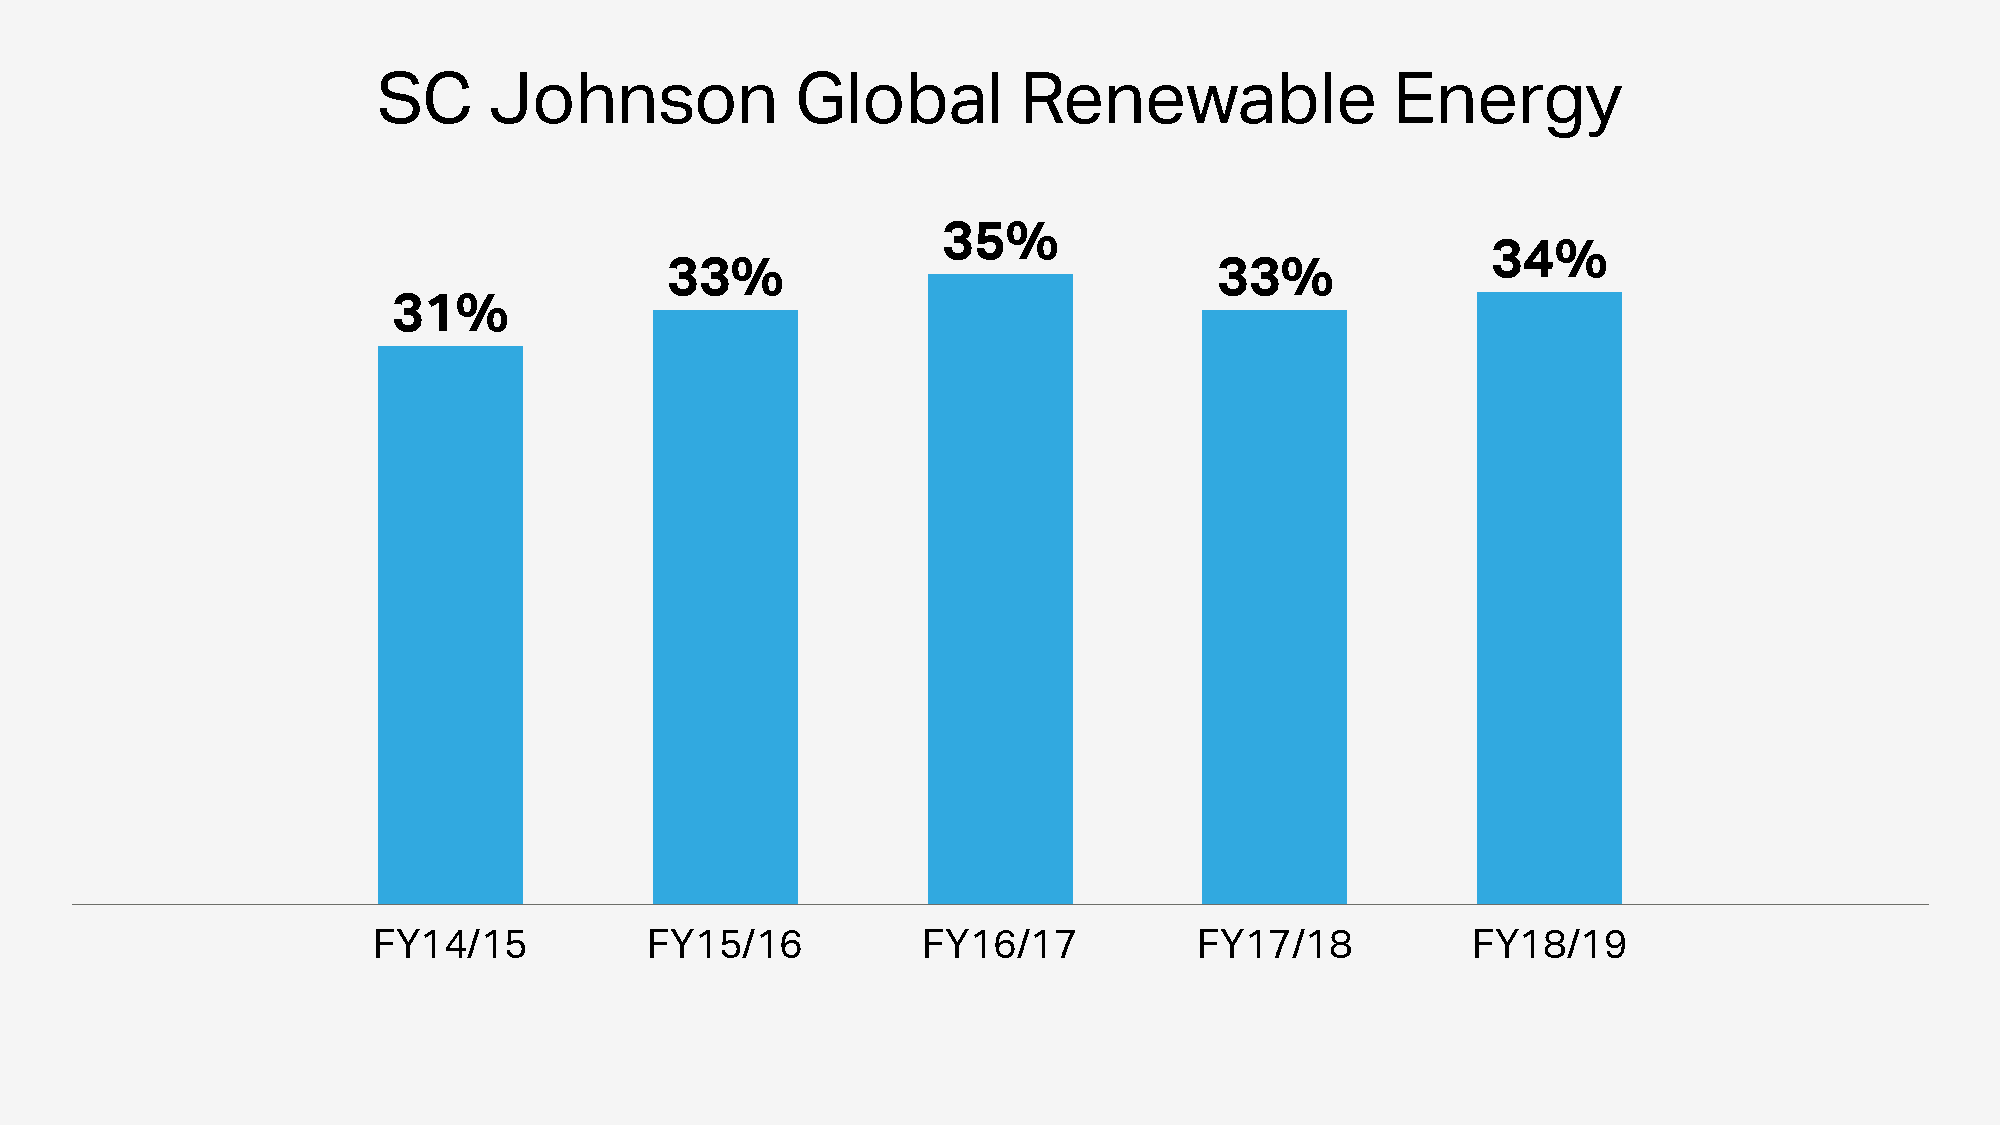 SC Johnson Global Renewable Energy Over the Years 